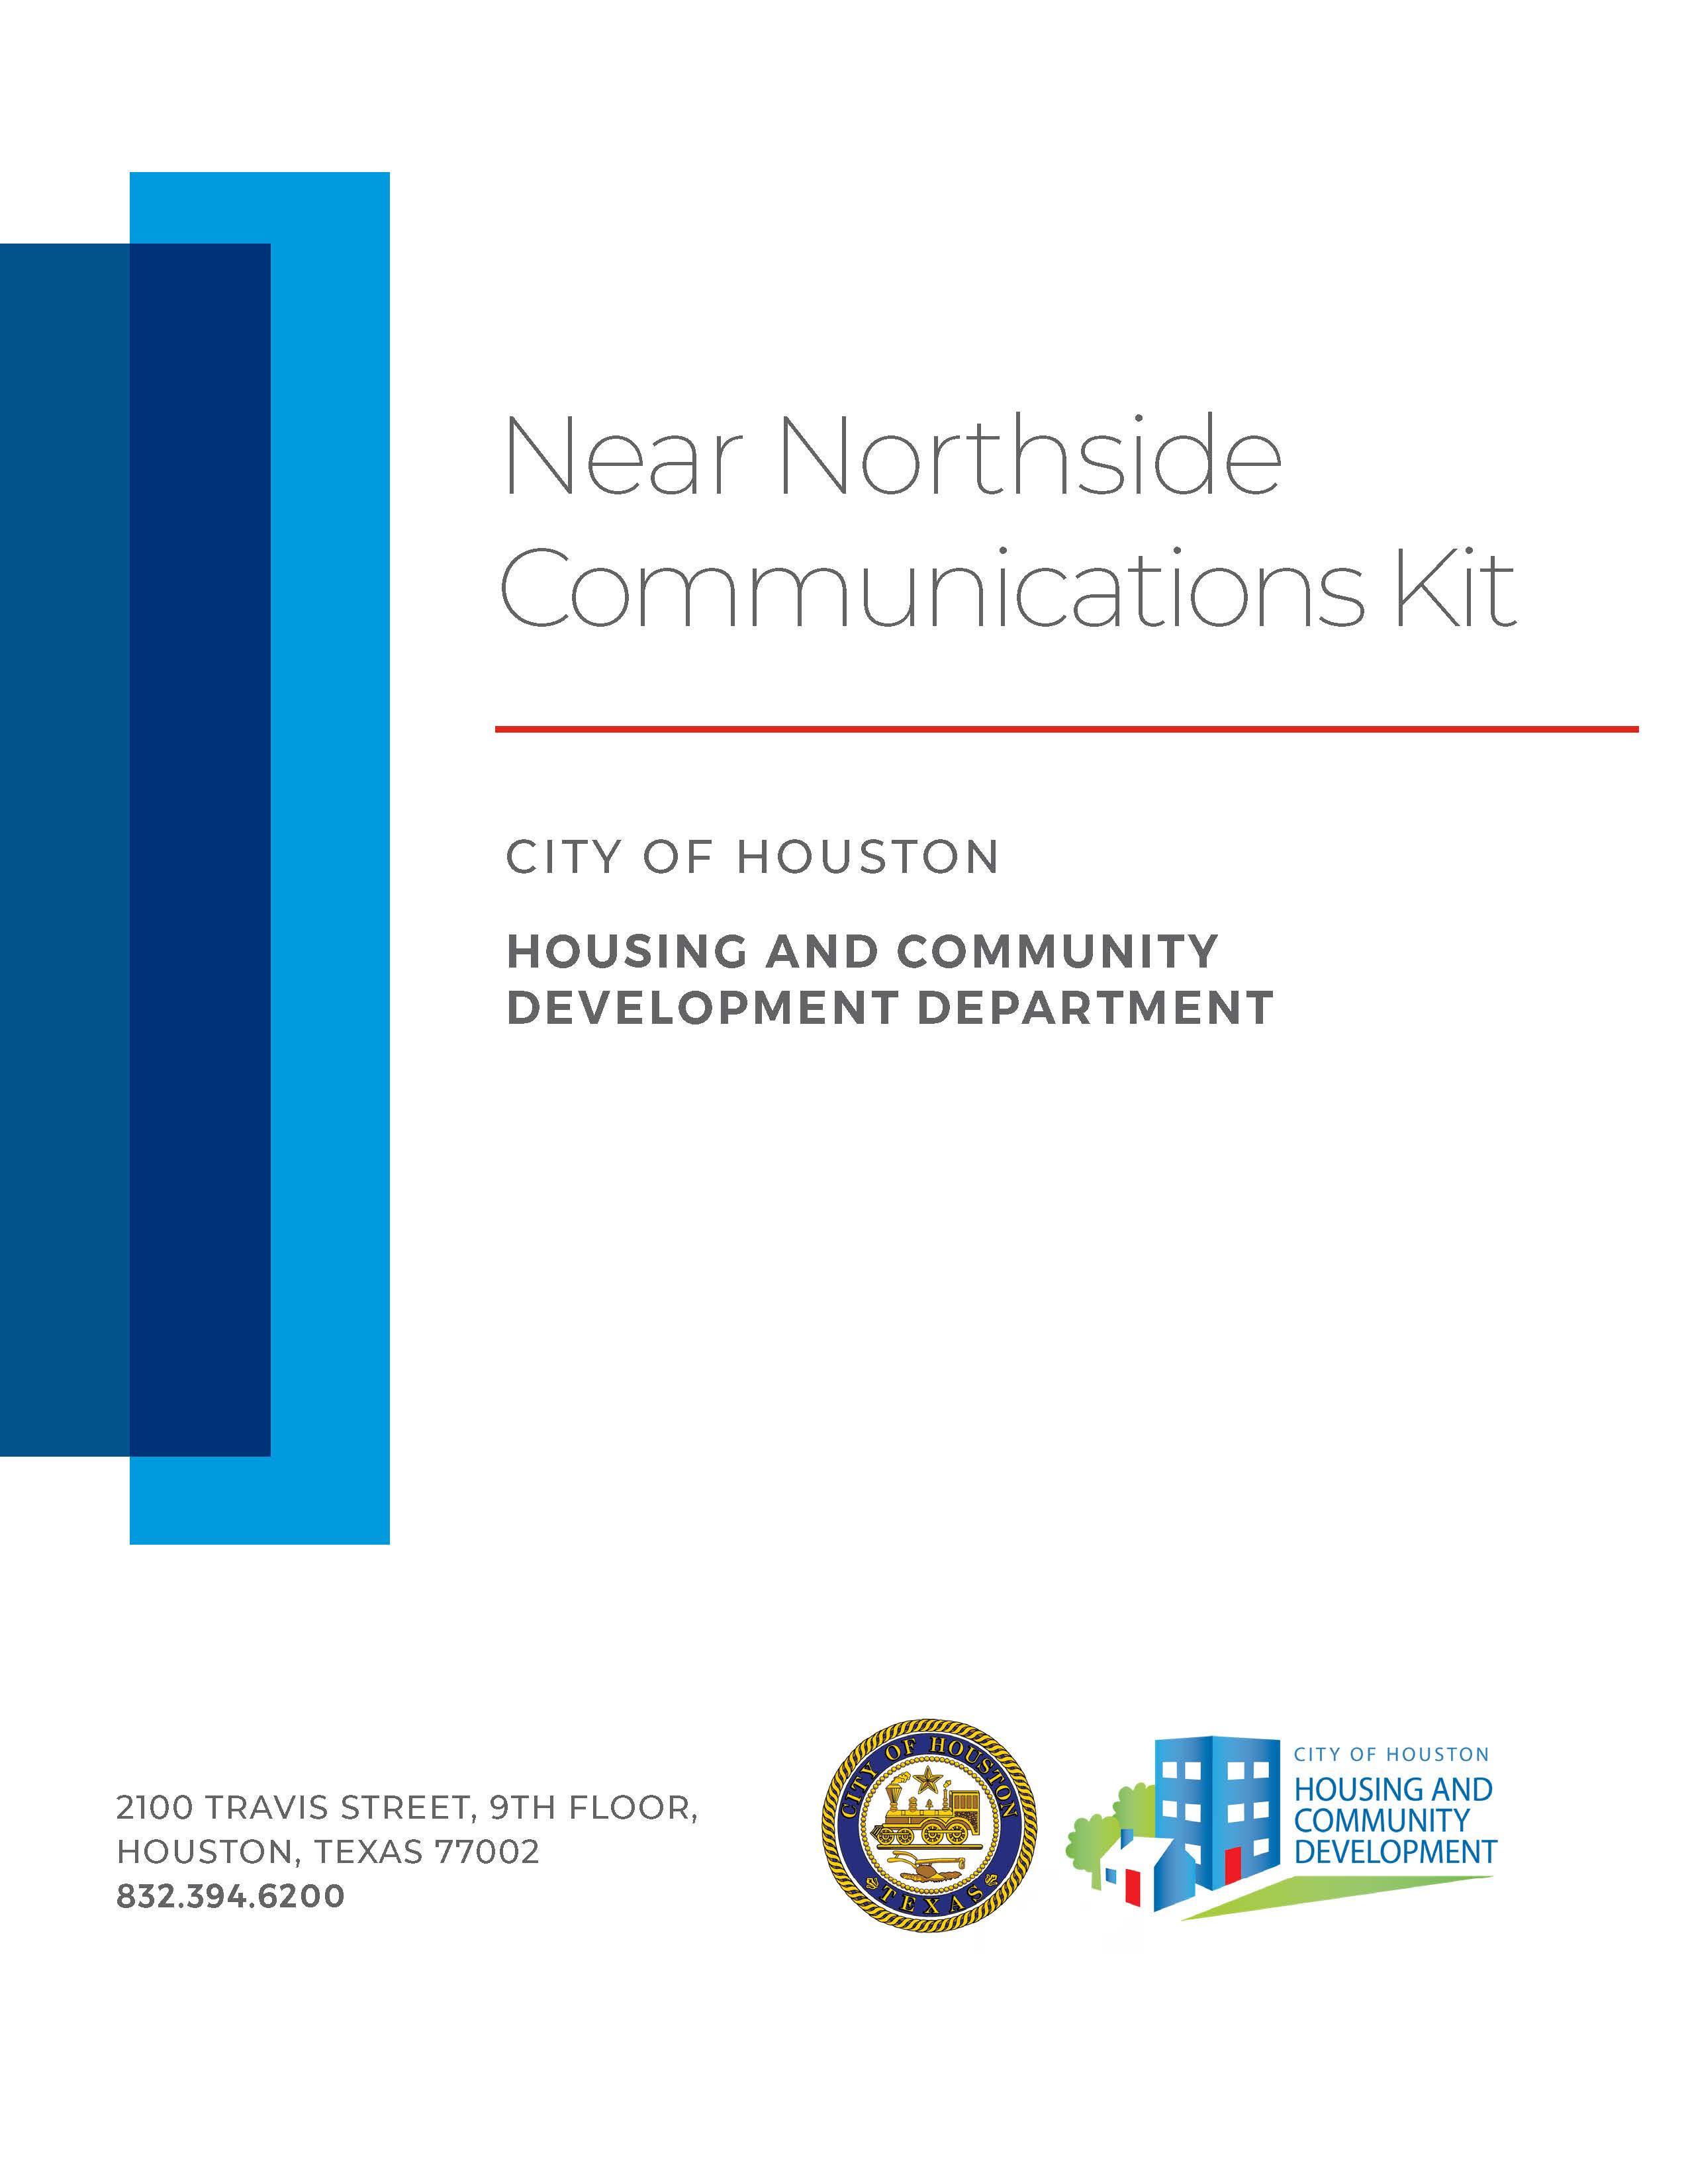 Near Northside Communications Kit